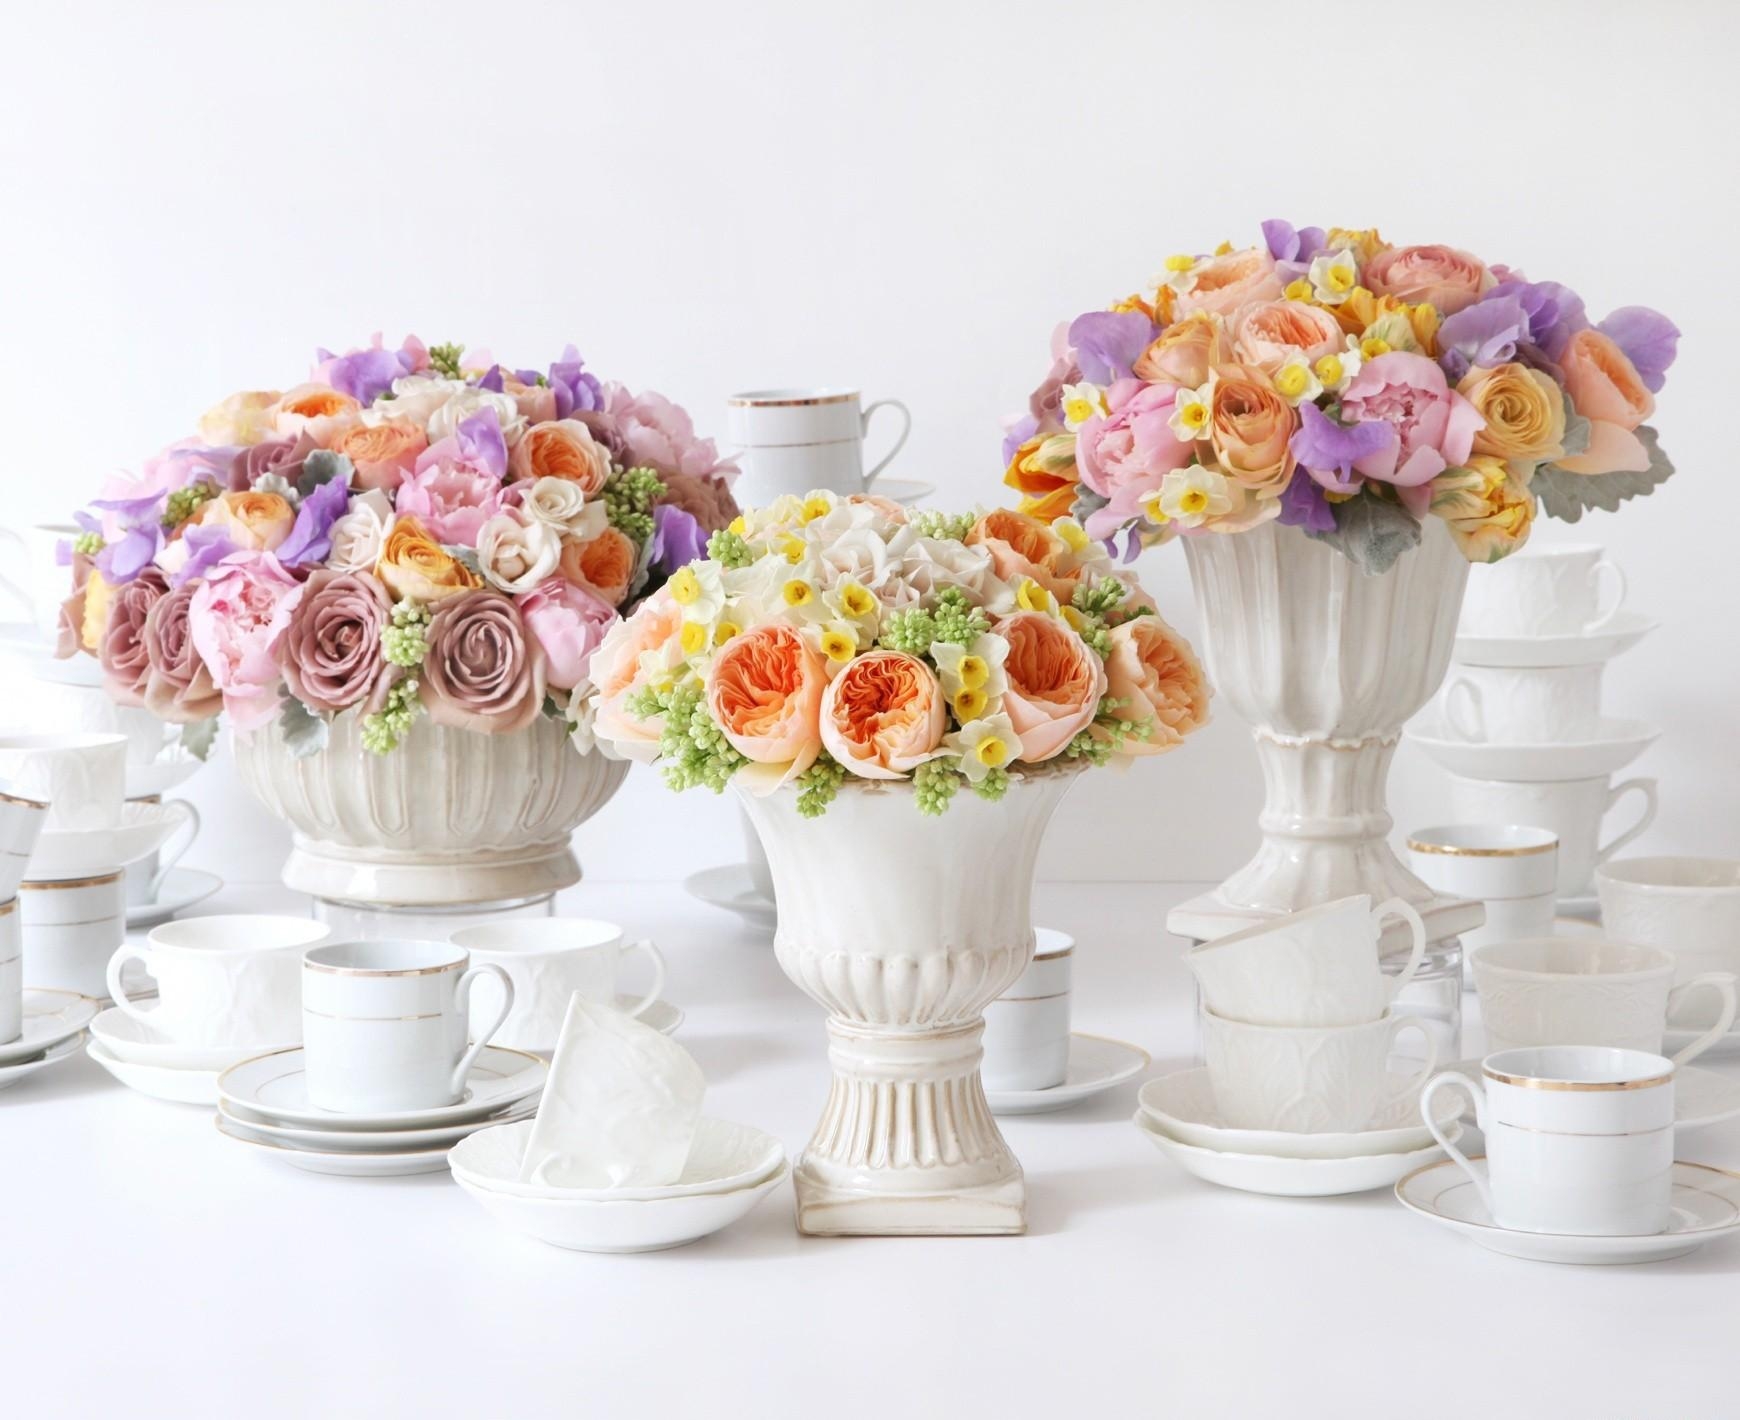 roses, narcissussi, flowers, bouquets, ranunculus, ranunkulus, vases, porcelain wallpaper for mobile